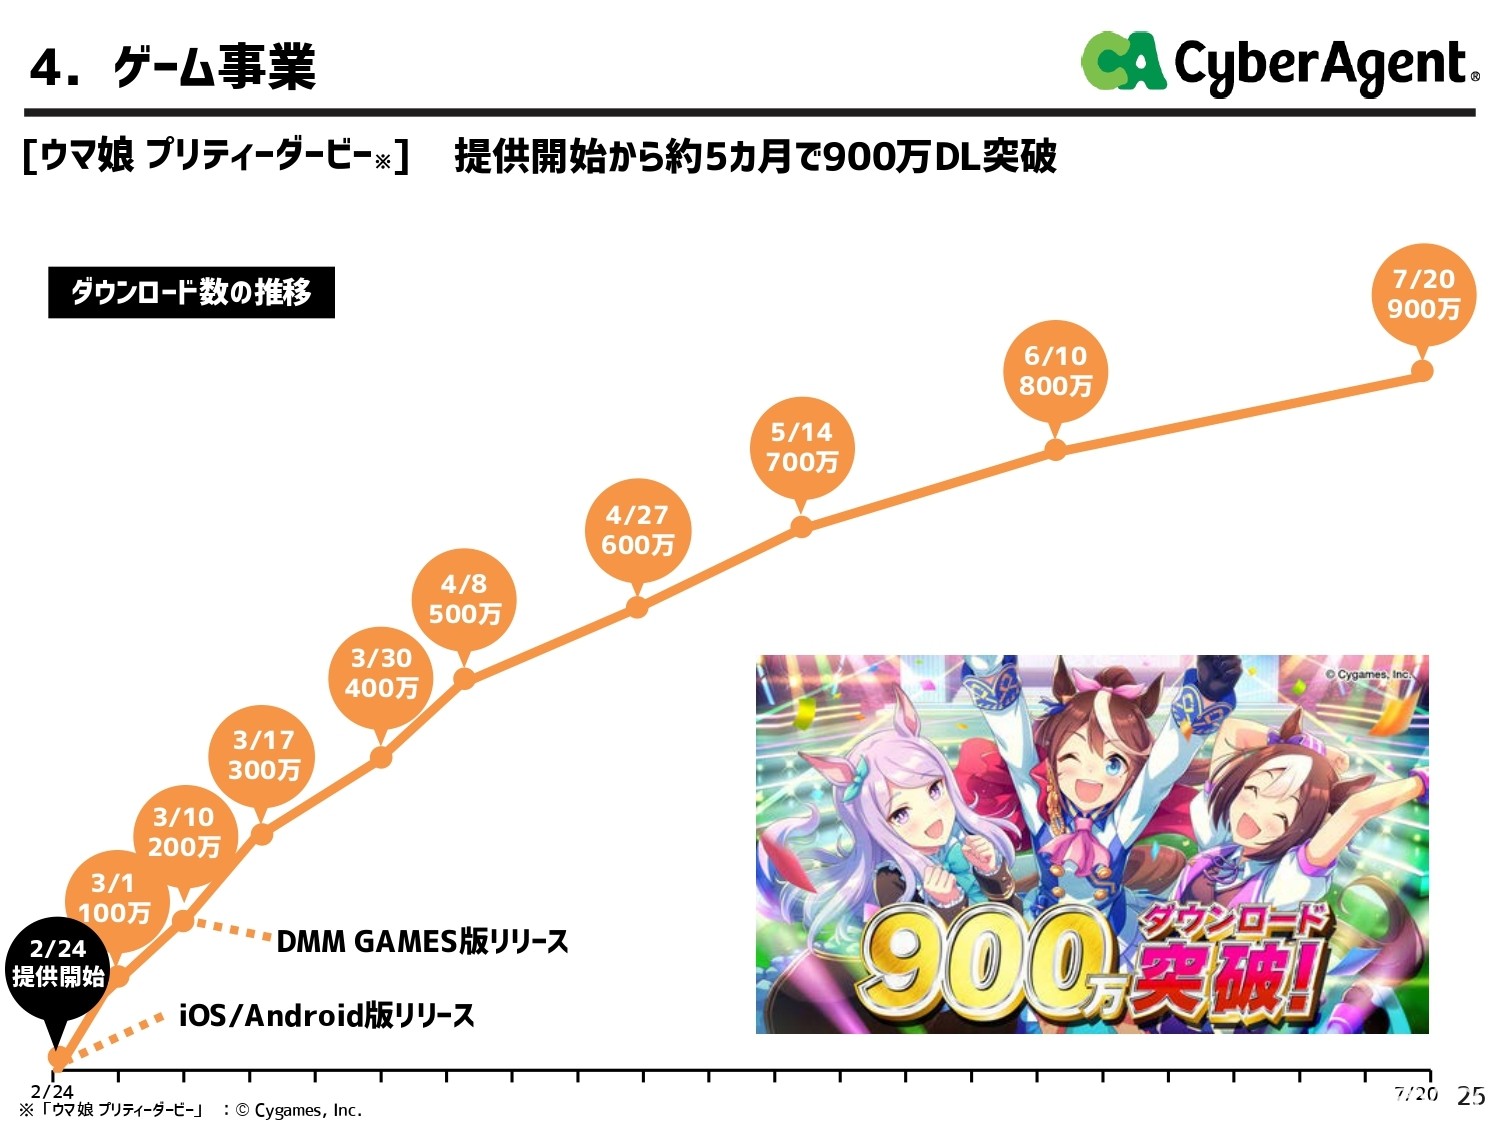 CyberAgent 第三季營收達 923 億日圓 最大功臣為《馬娘 漂亮賽馬》